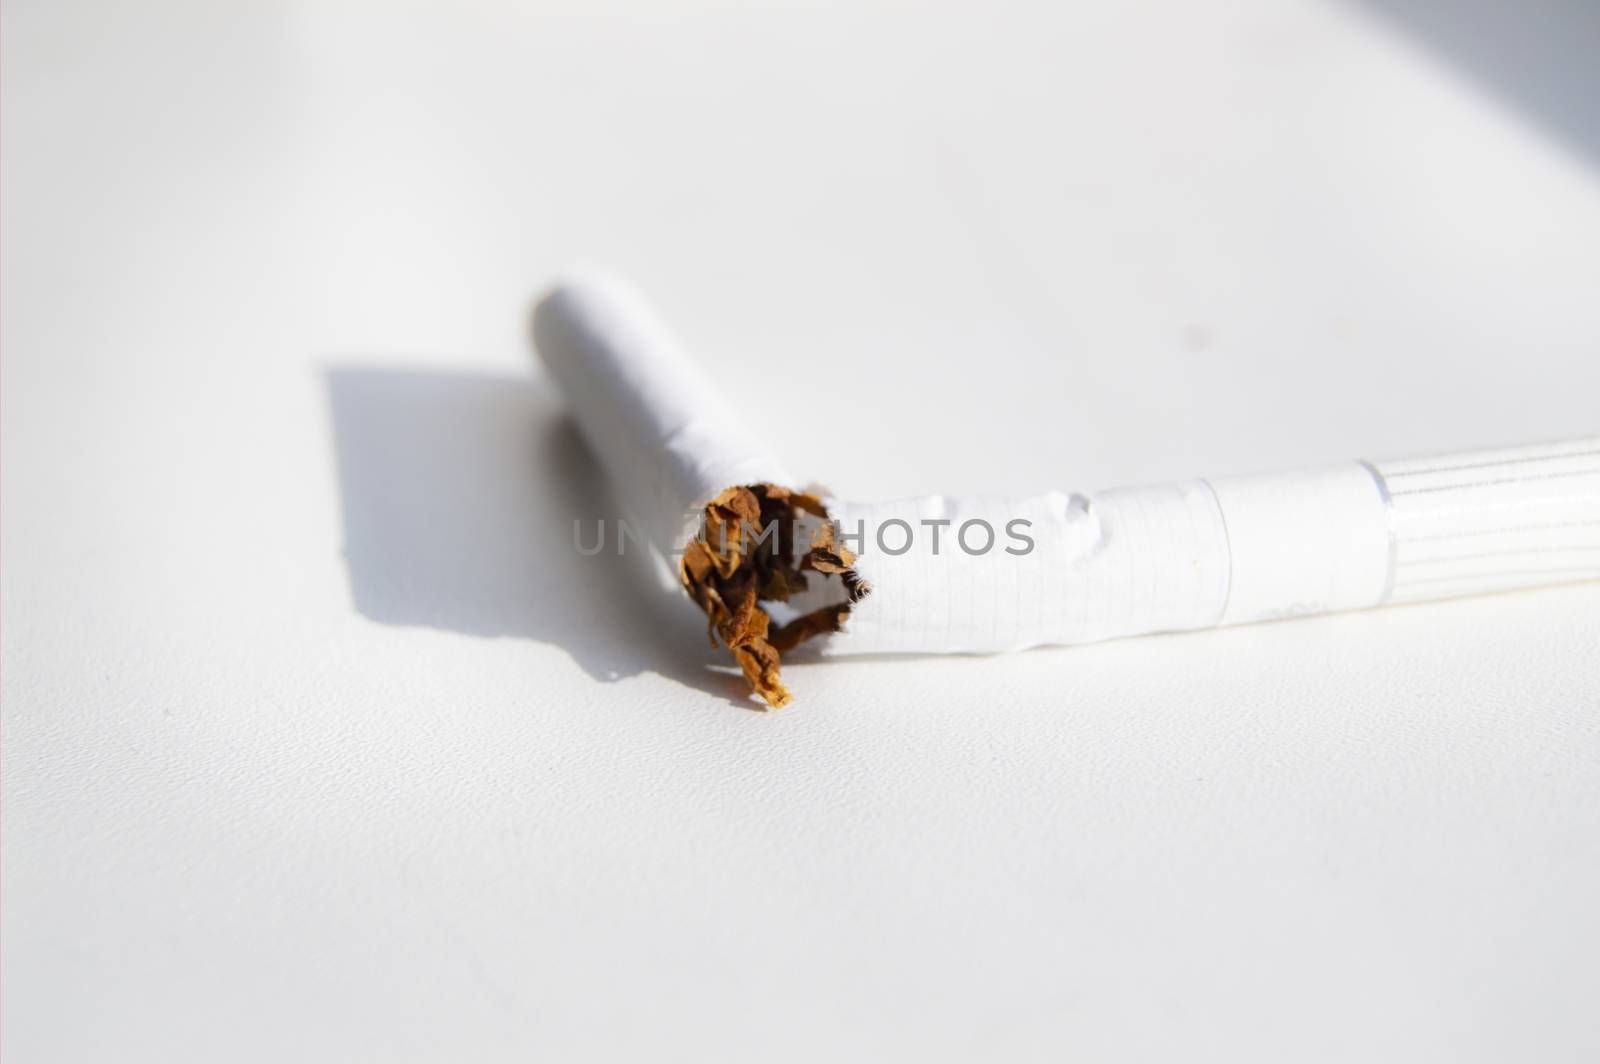 Broken cigarette on white background, Smoking cessation concept, minimalism style, selective focus.